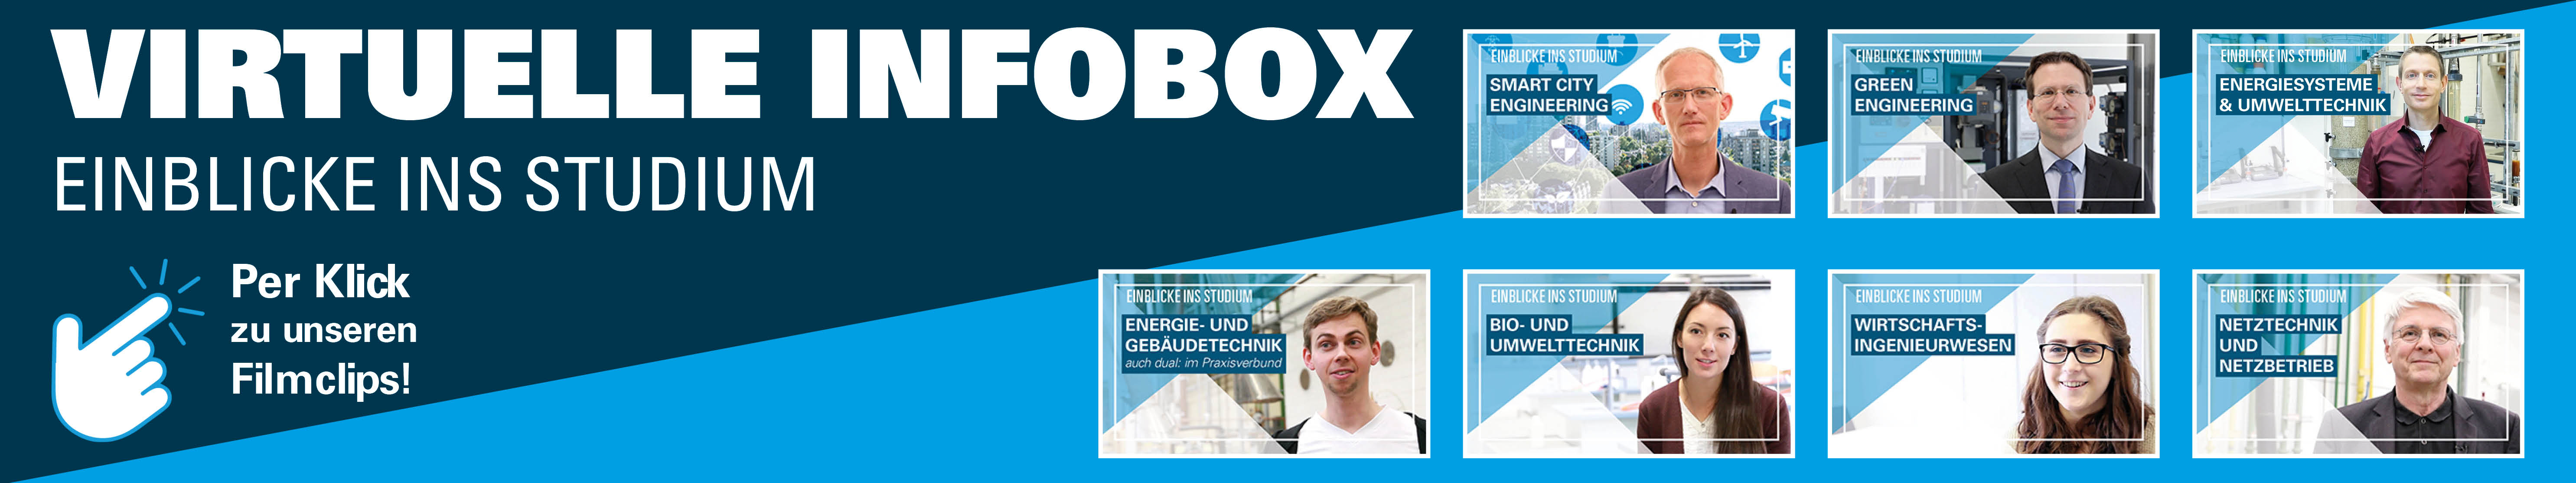 Virtuelle Infobox